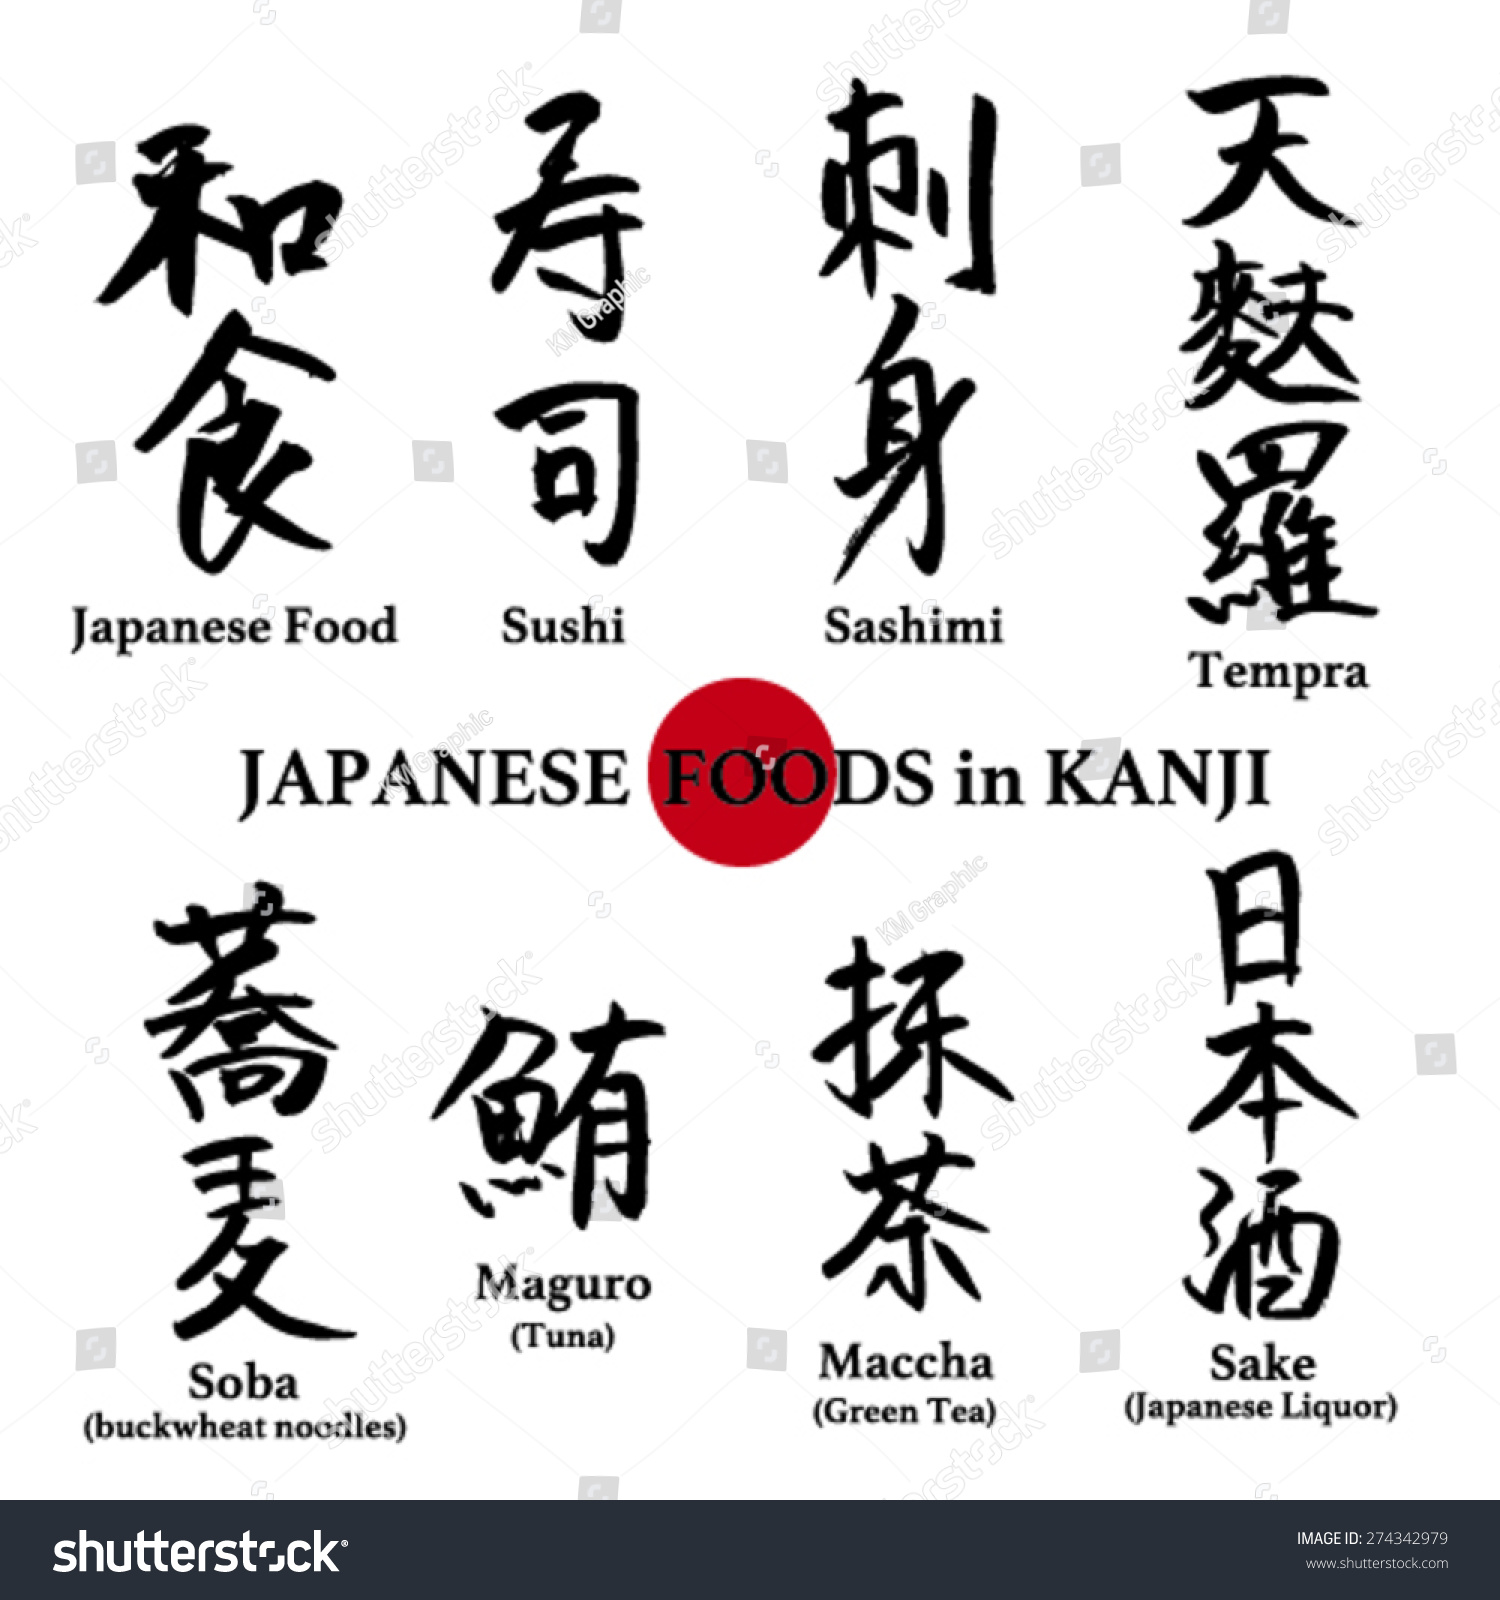 Japanese Food In Kanji Stock Vector Illustration 274342979 : Shutterstock.